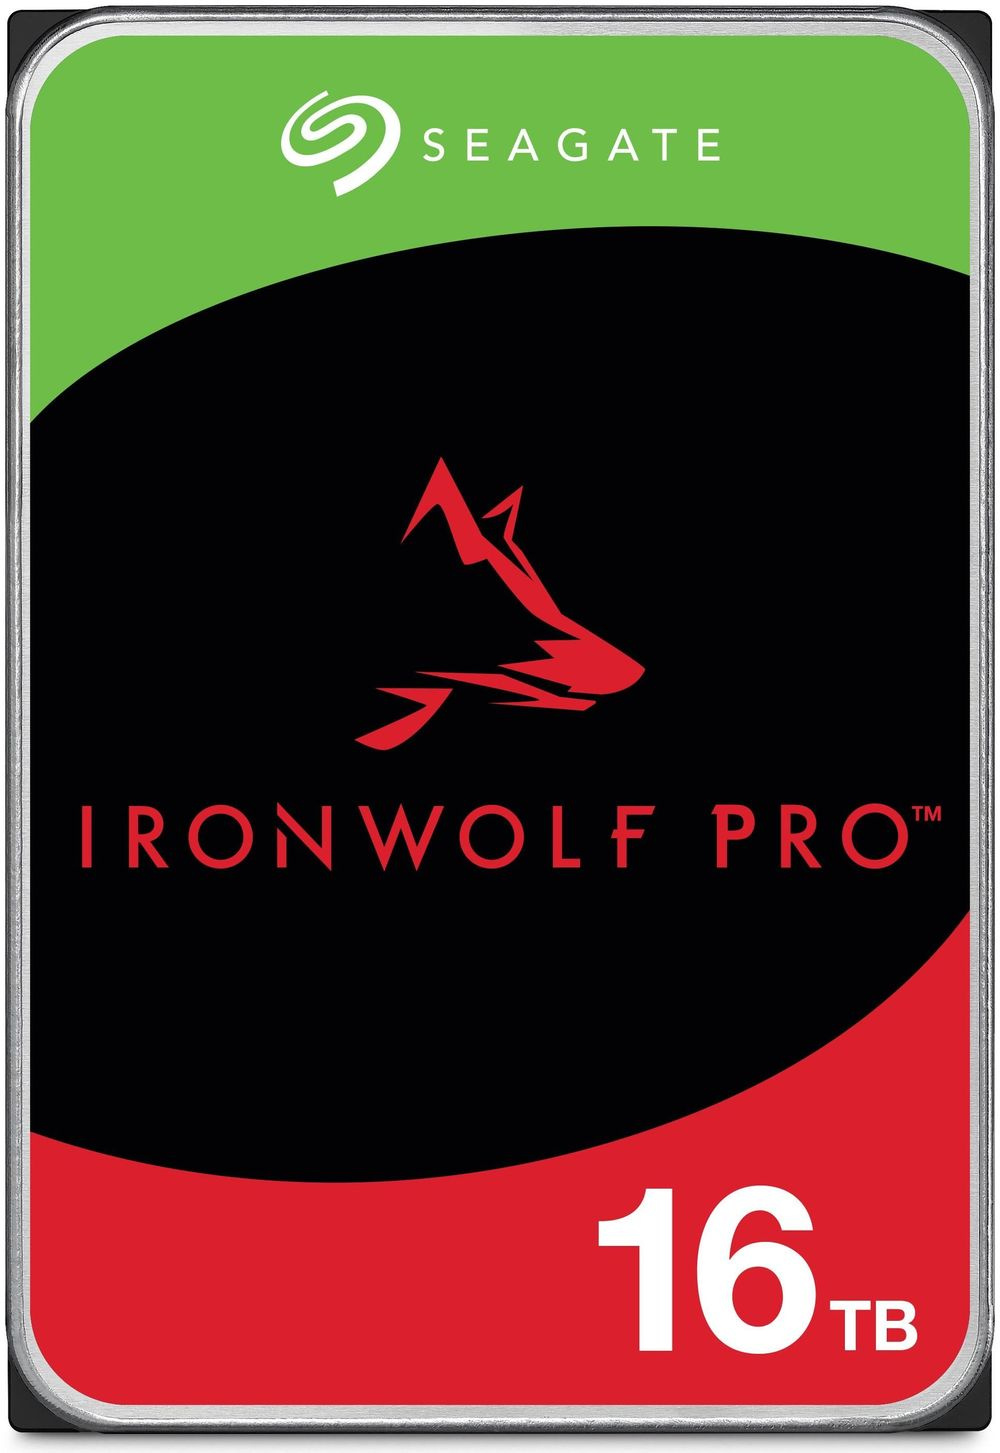   Seagate Ironwolf Pro ST16000NT001,  16,  HDD,  SATA III,  3.5